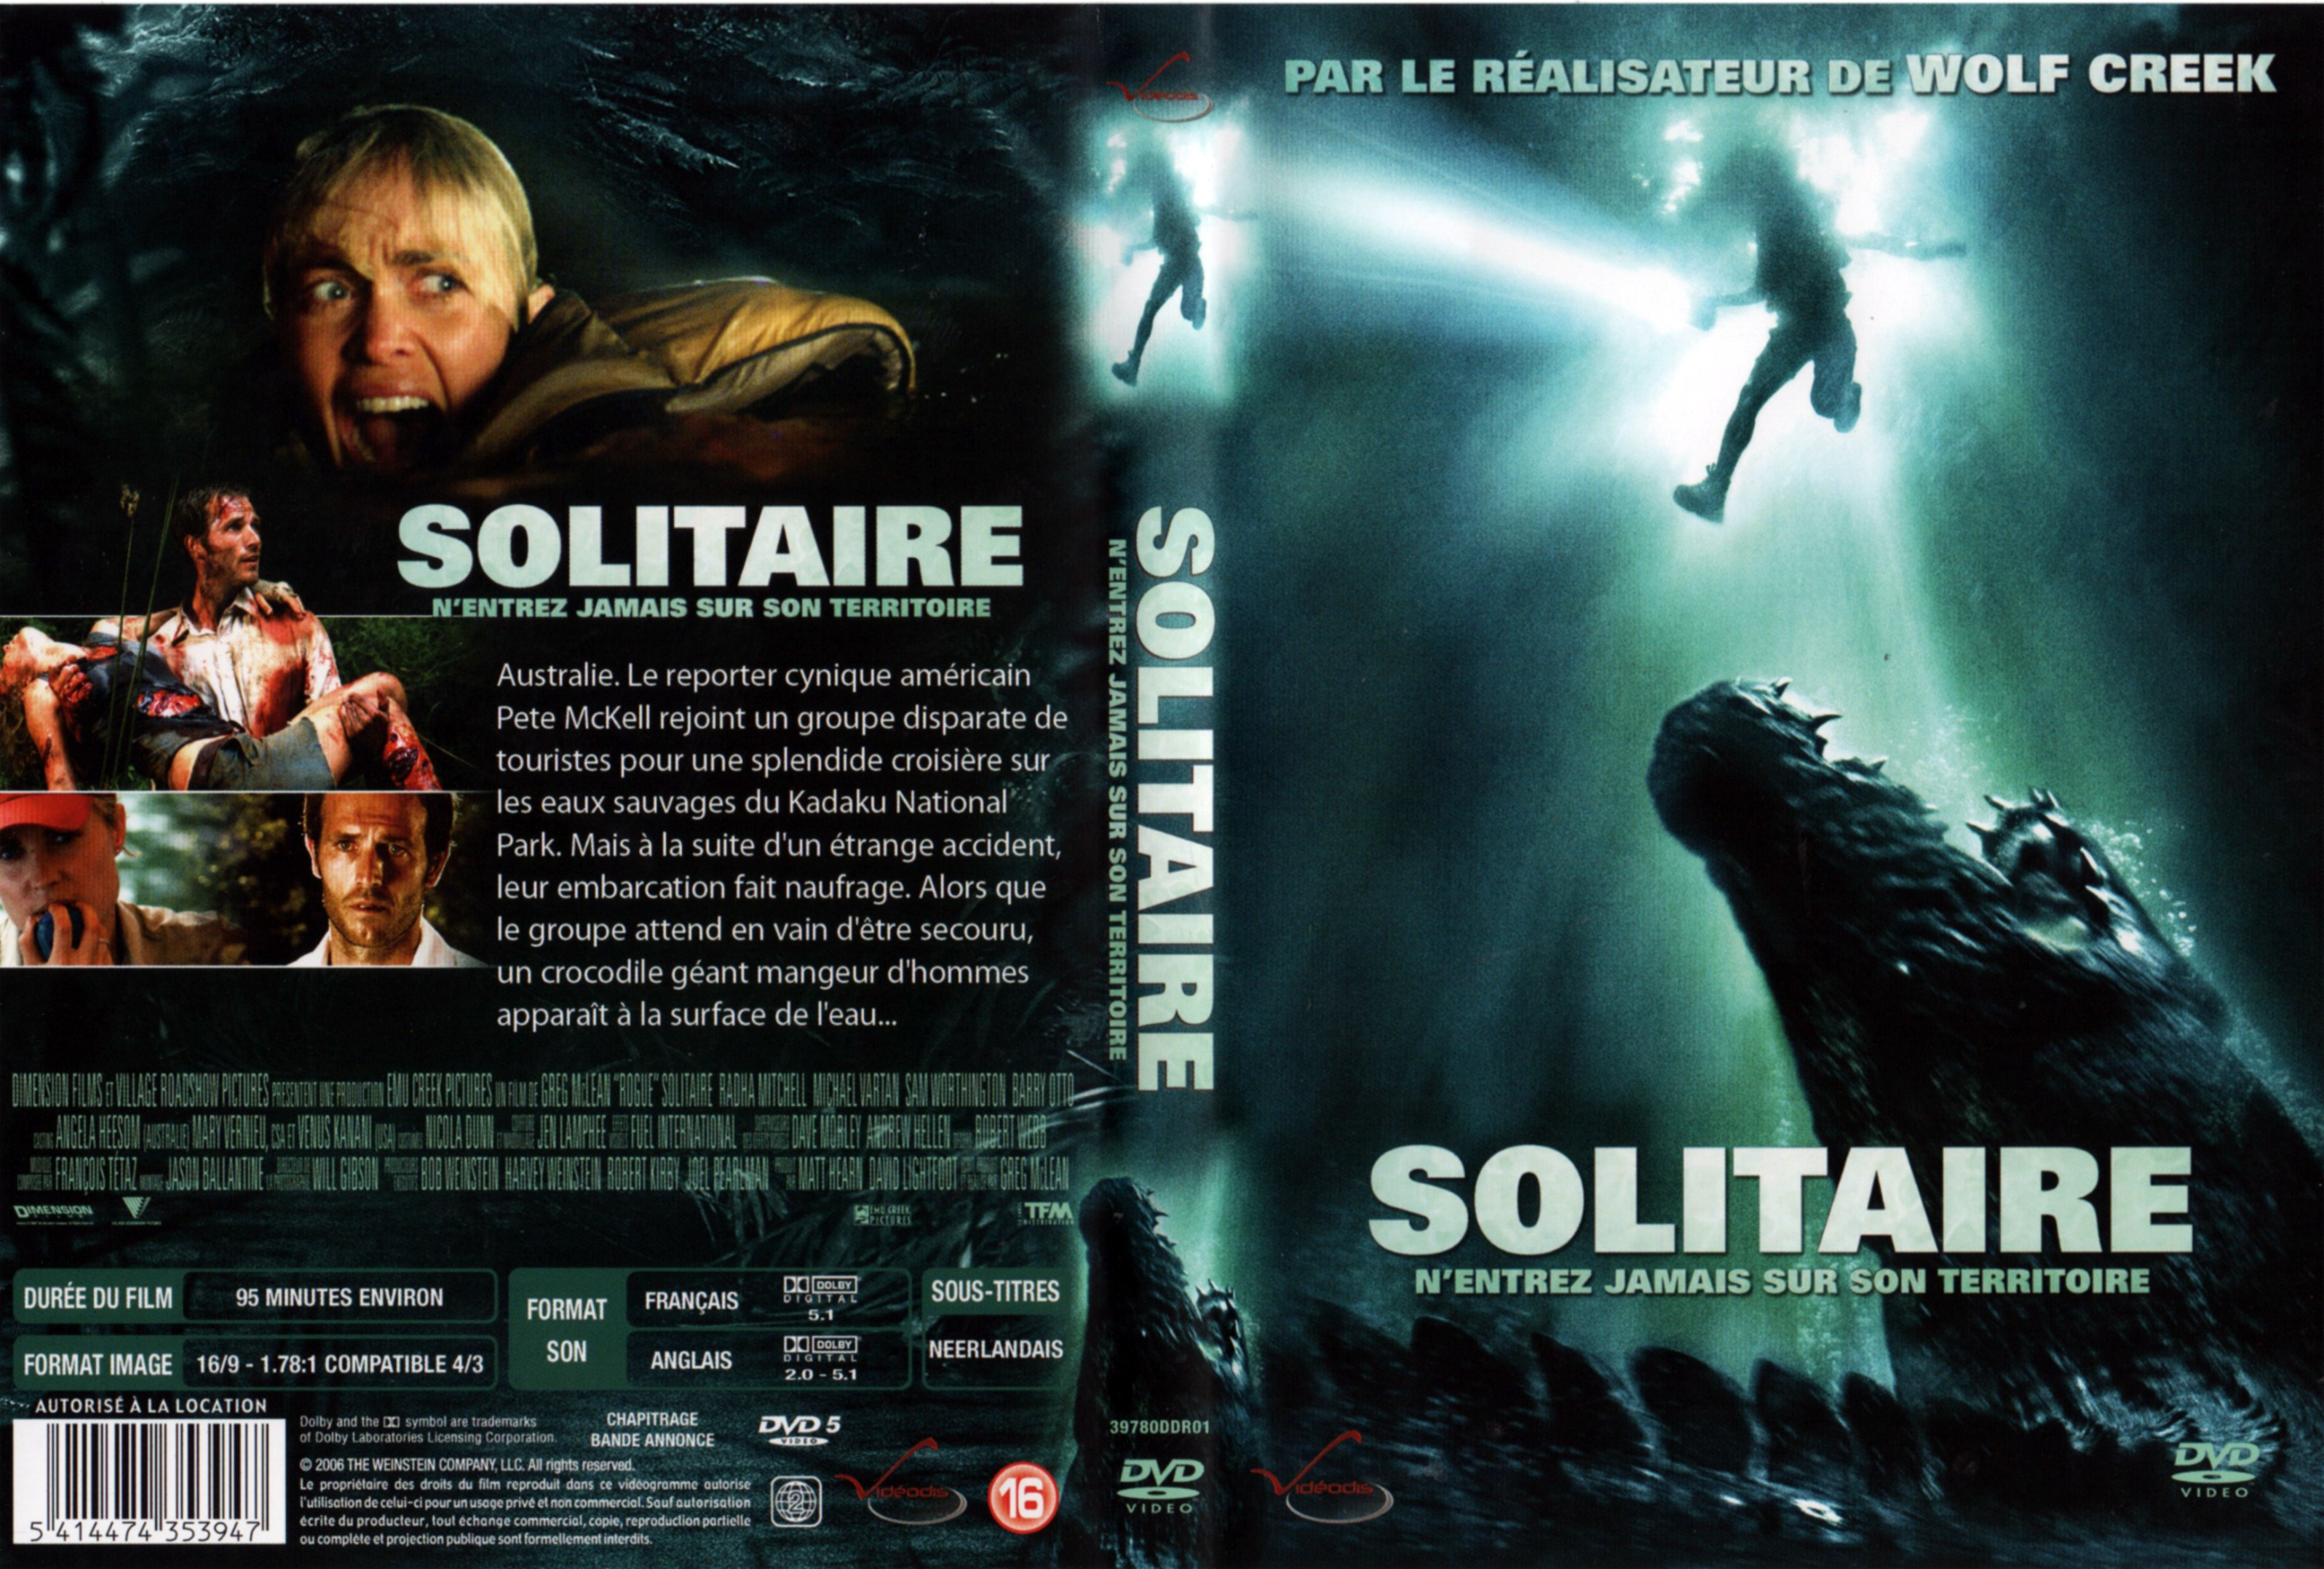 Jaquette DVD Solitaire